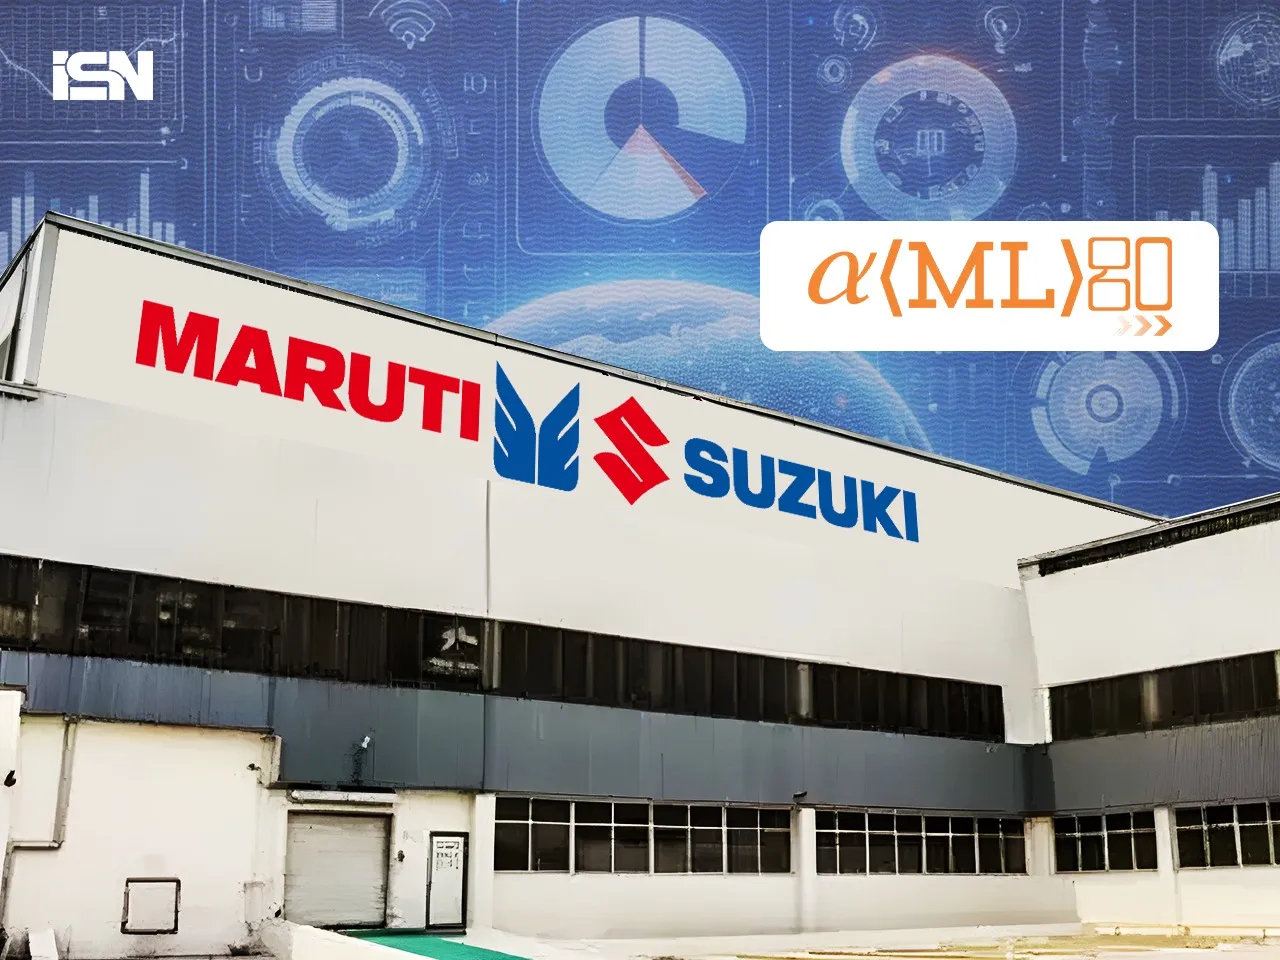 Maruti Suzuki invests in Amlgo